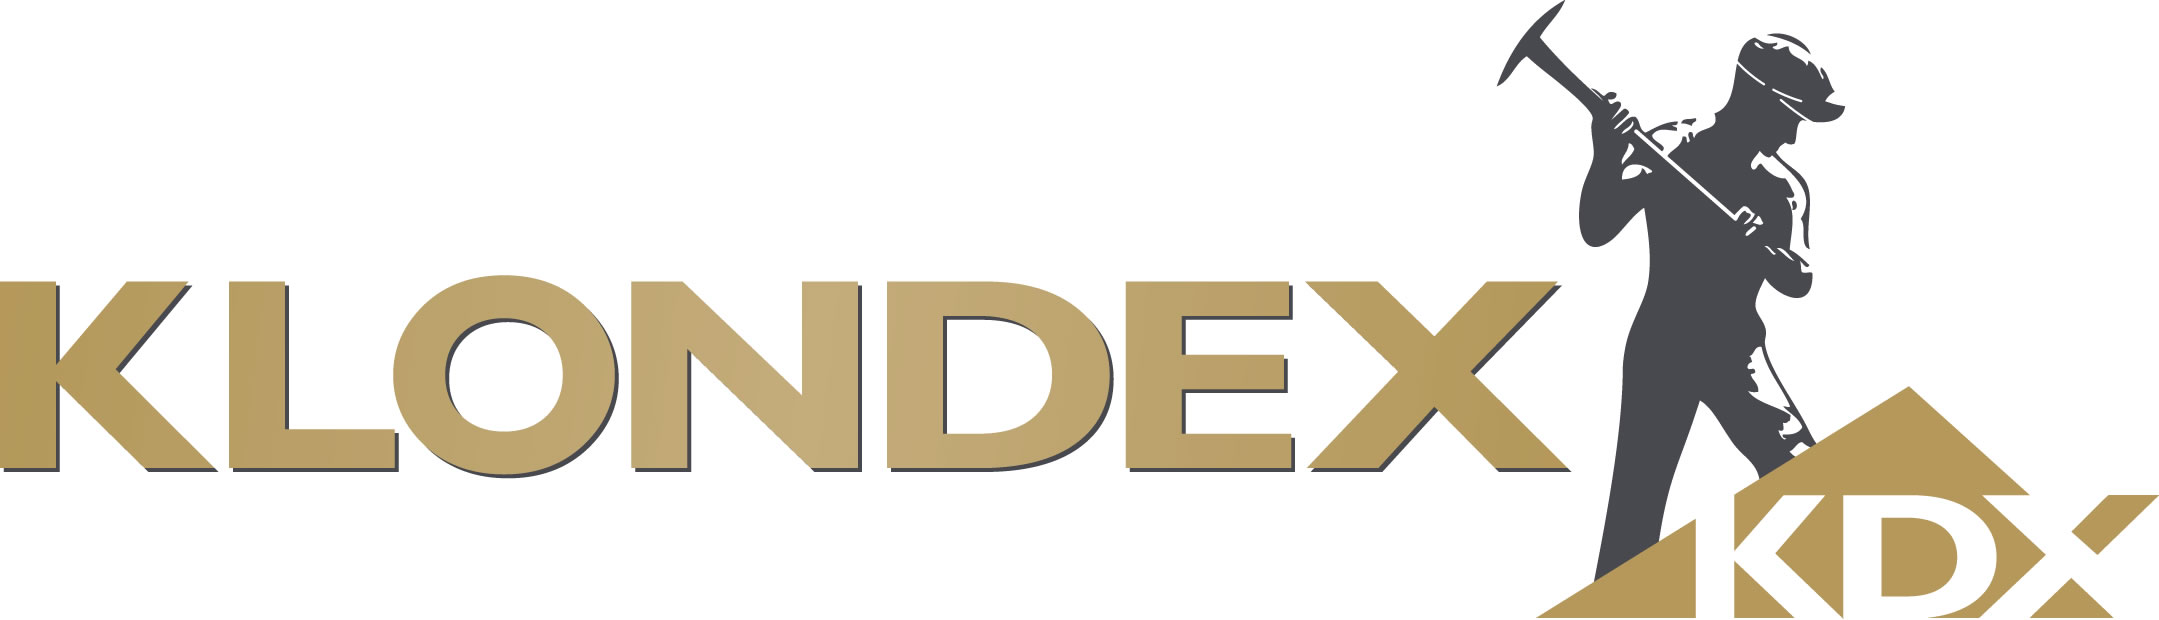 Klondex Announces Ne